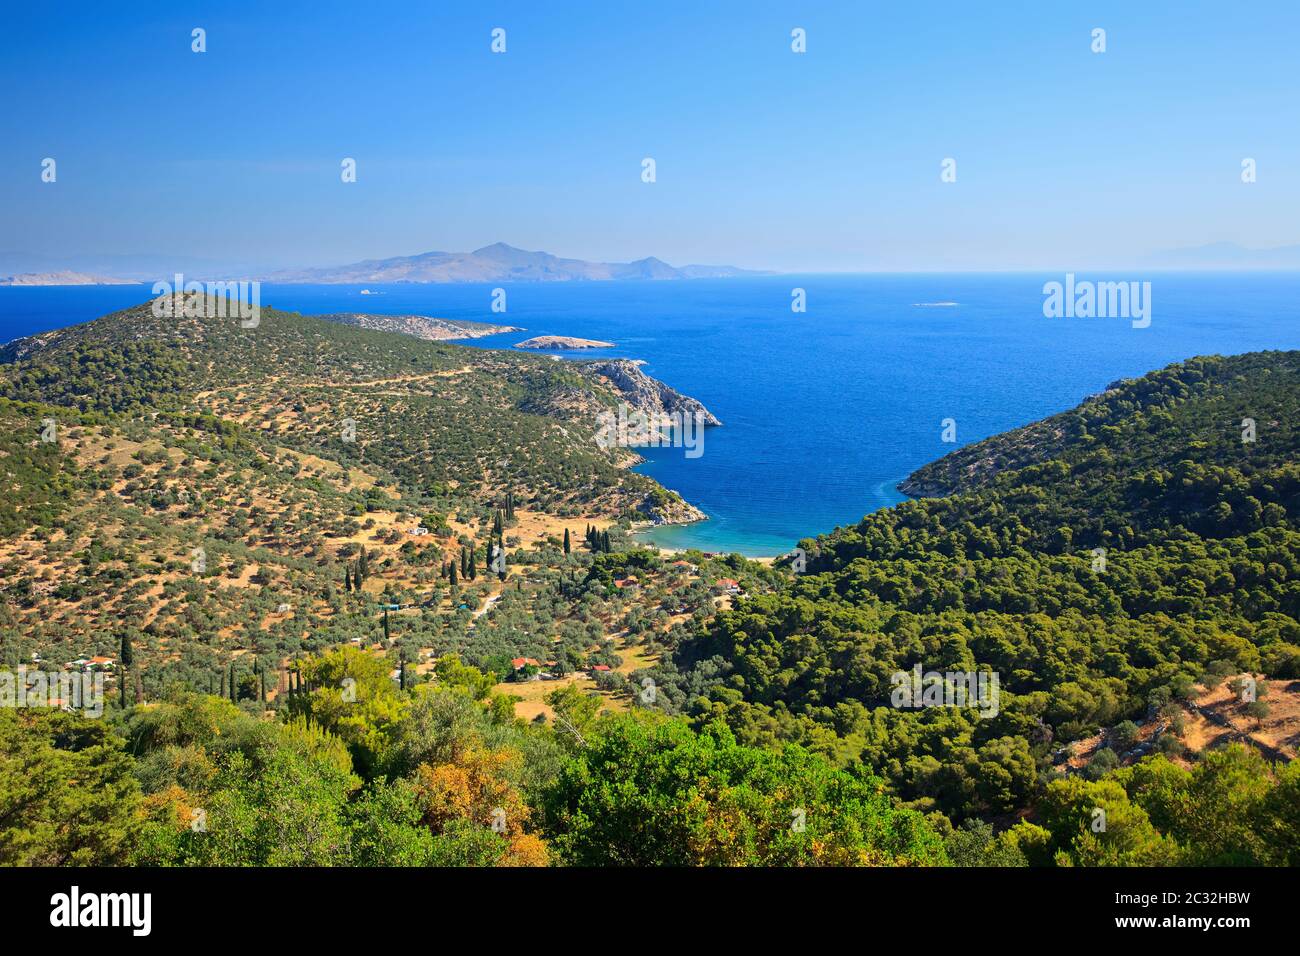 Greek islands in Aegean sea Stock Photo